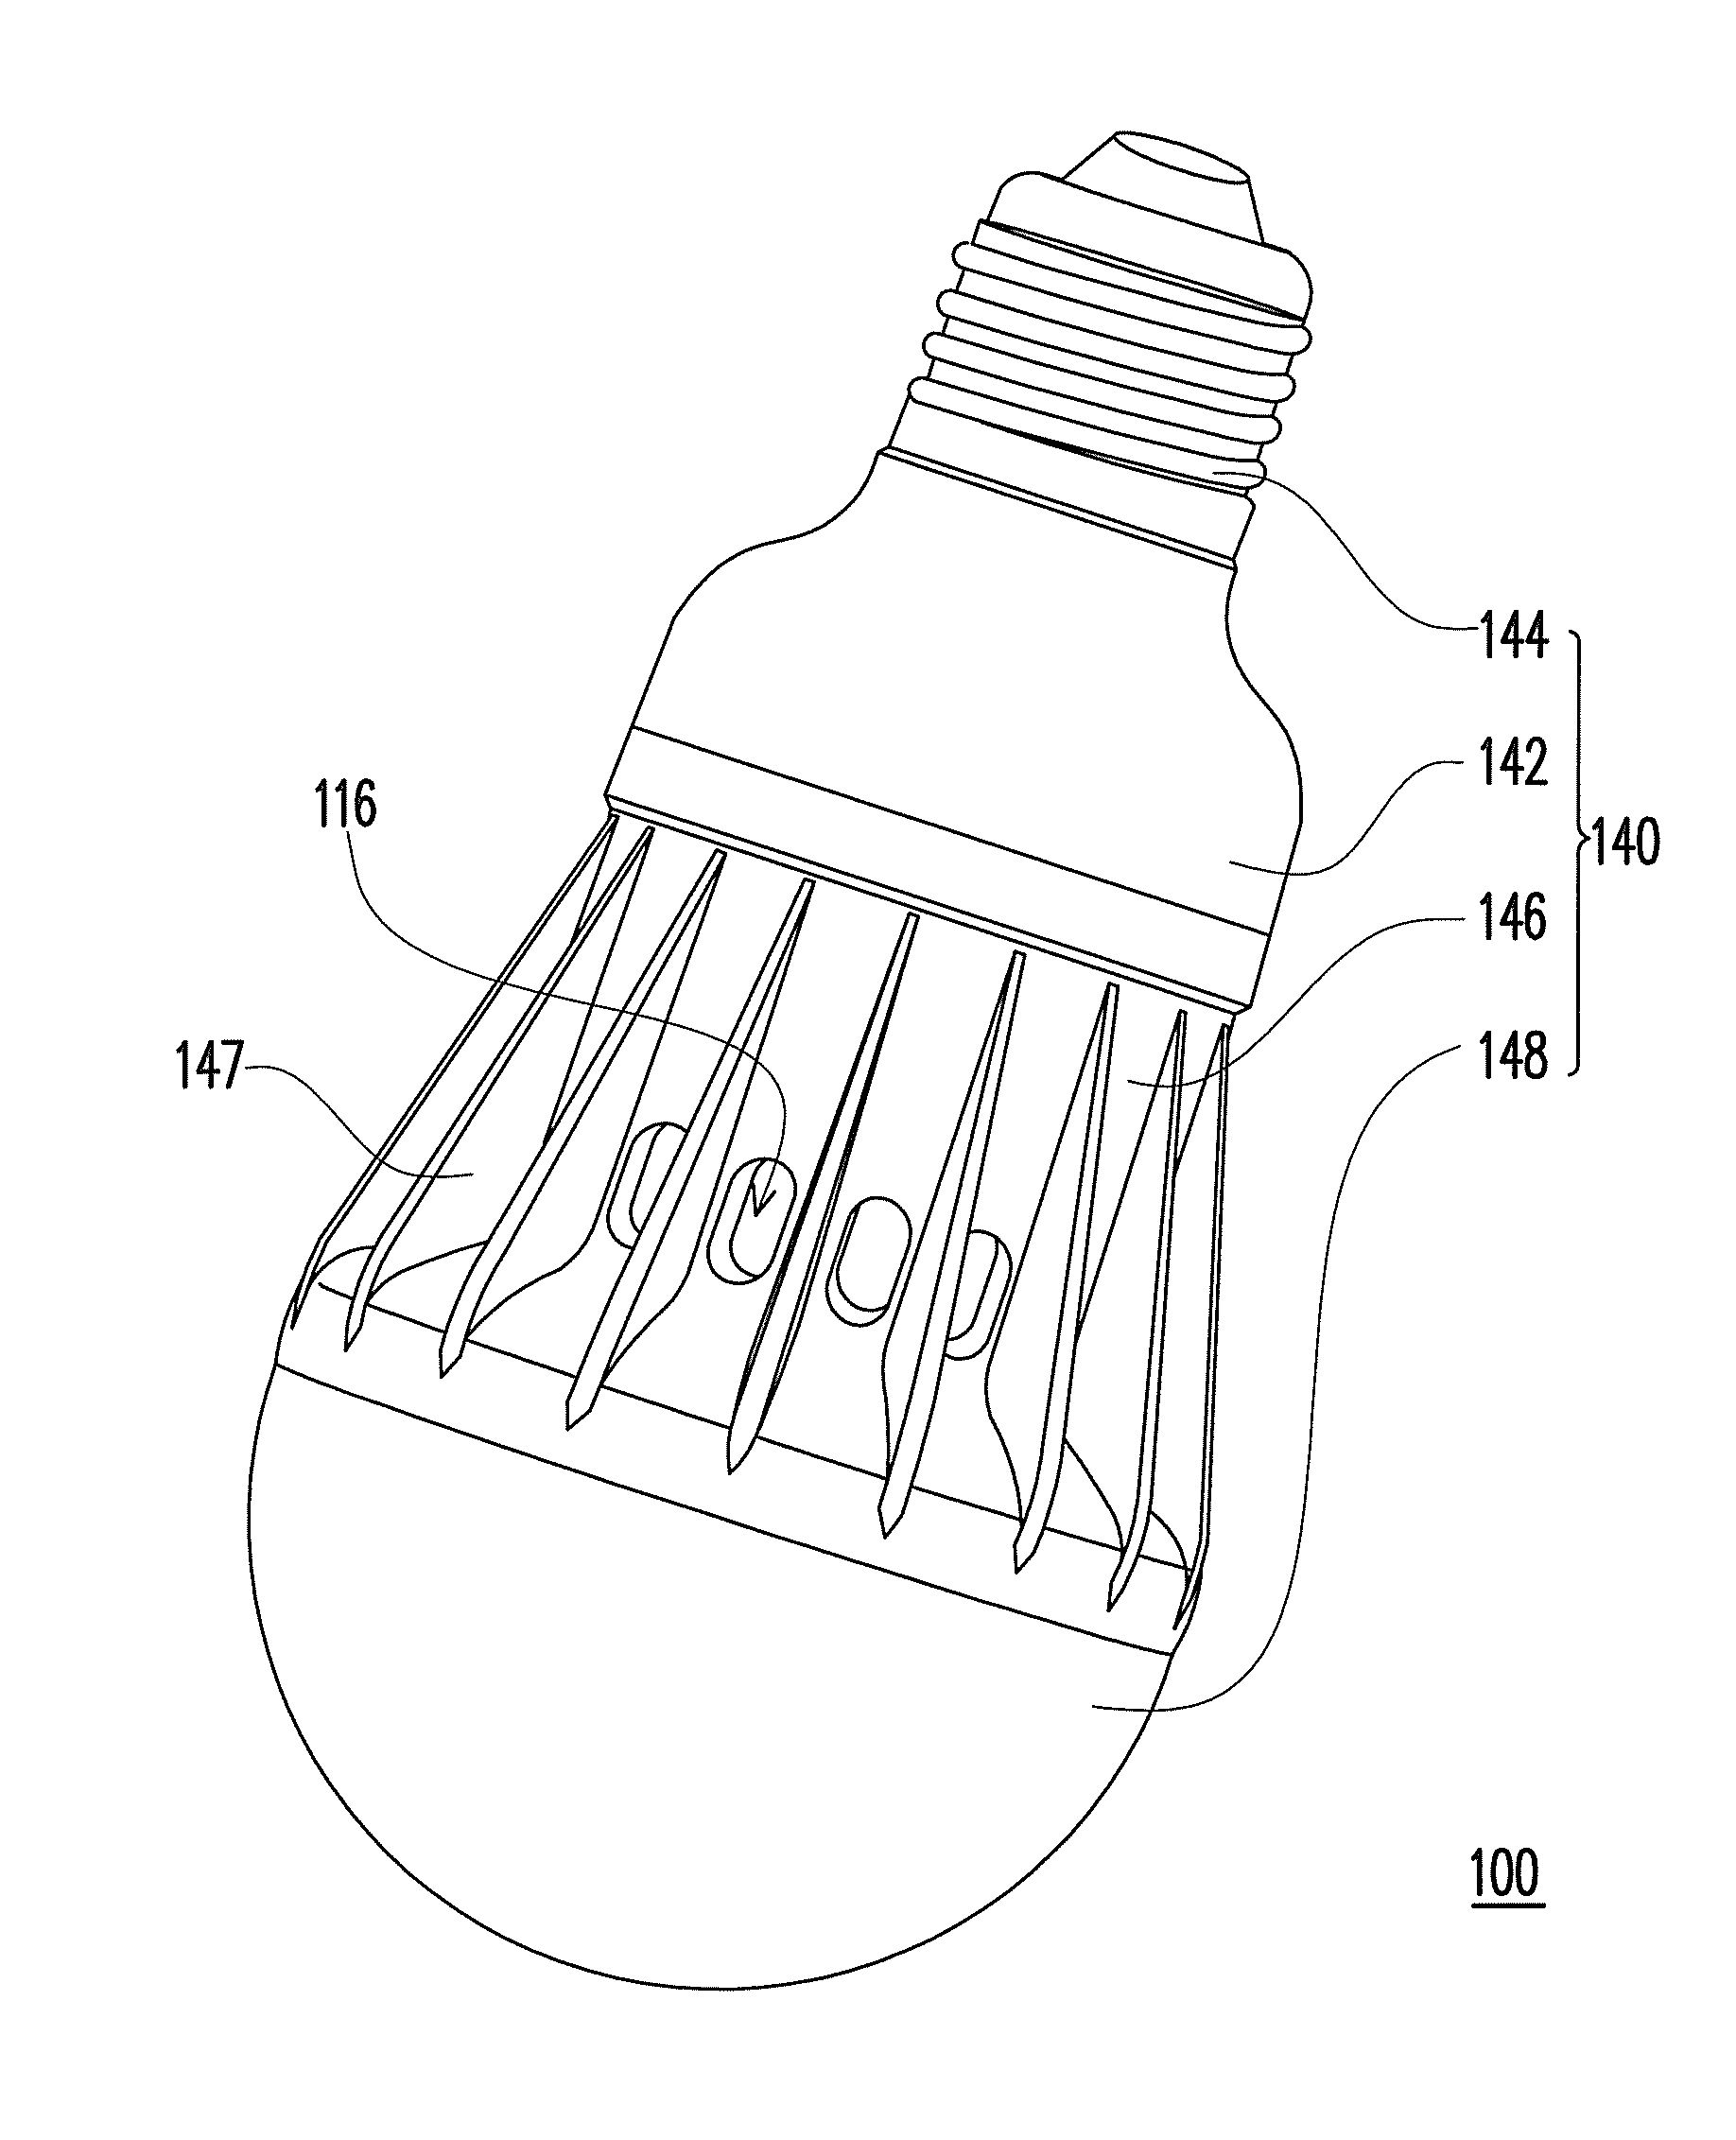 Light-emitting diode illumination apparatus